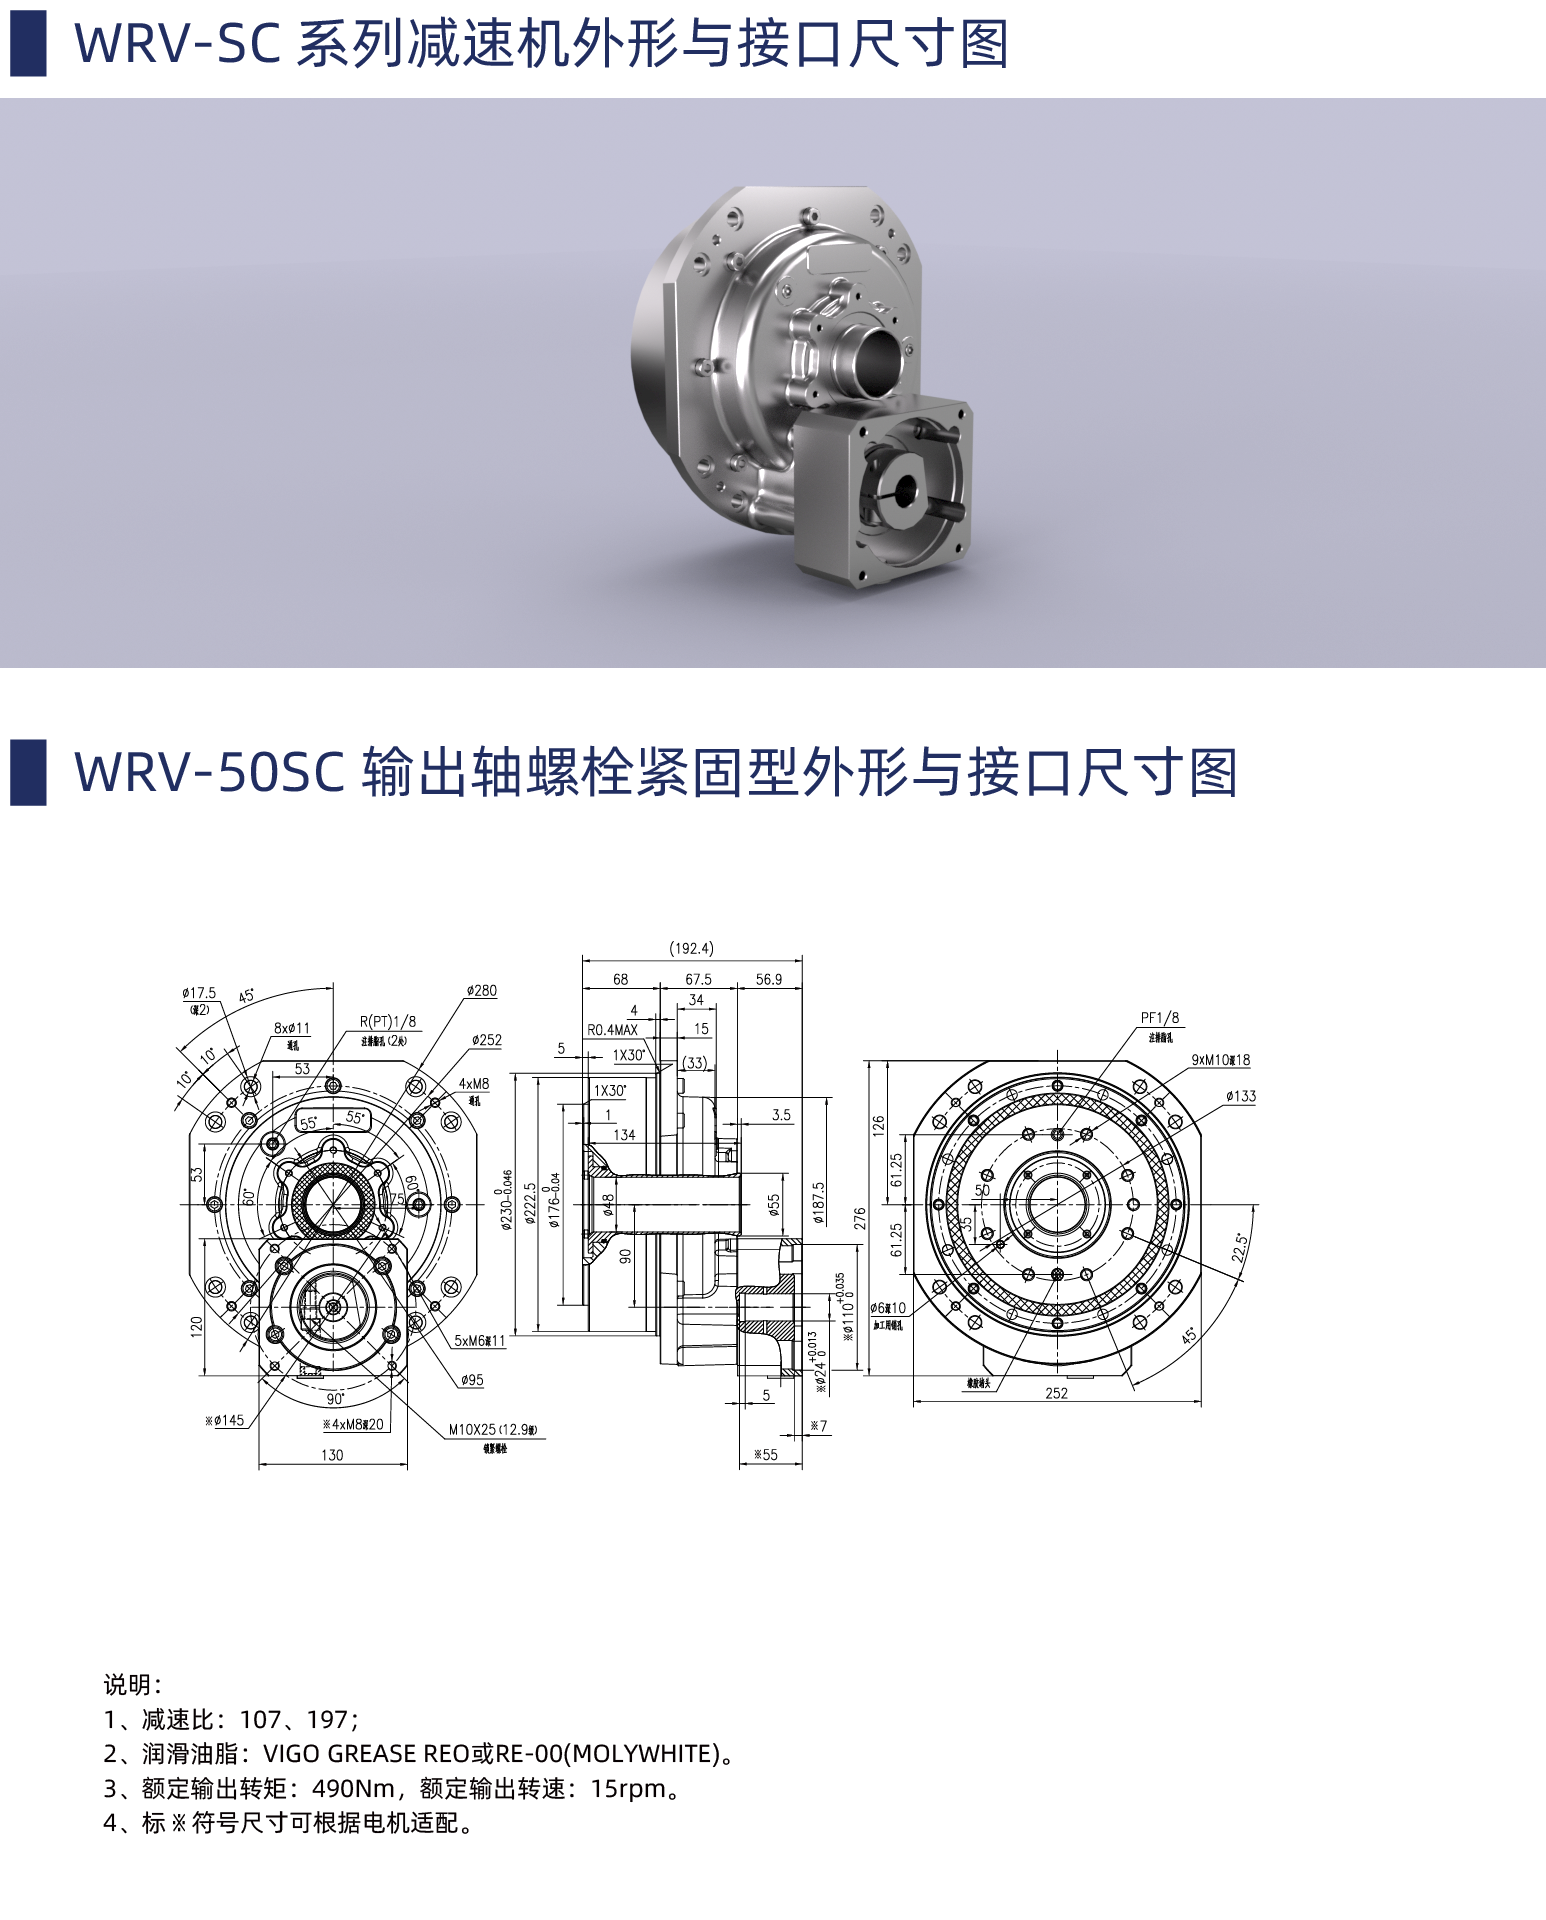 WRV-50SC系列详情